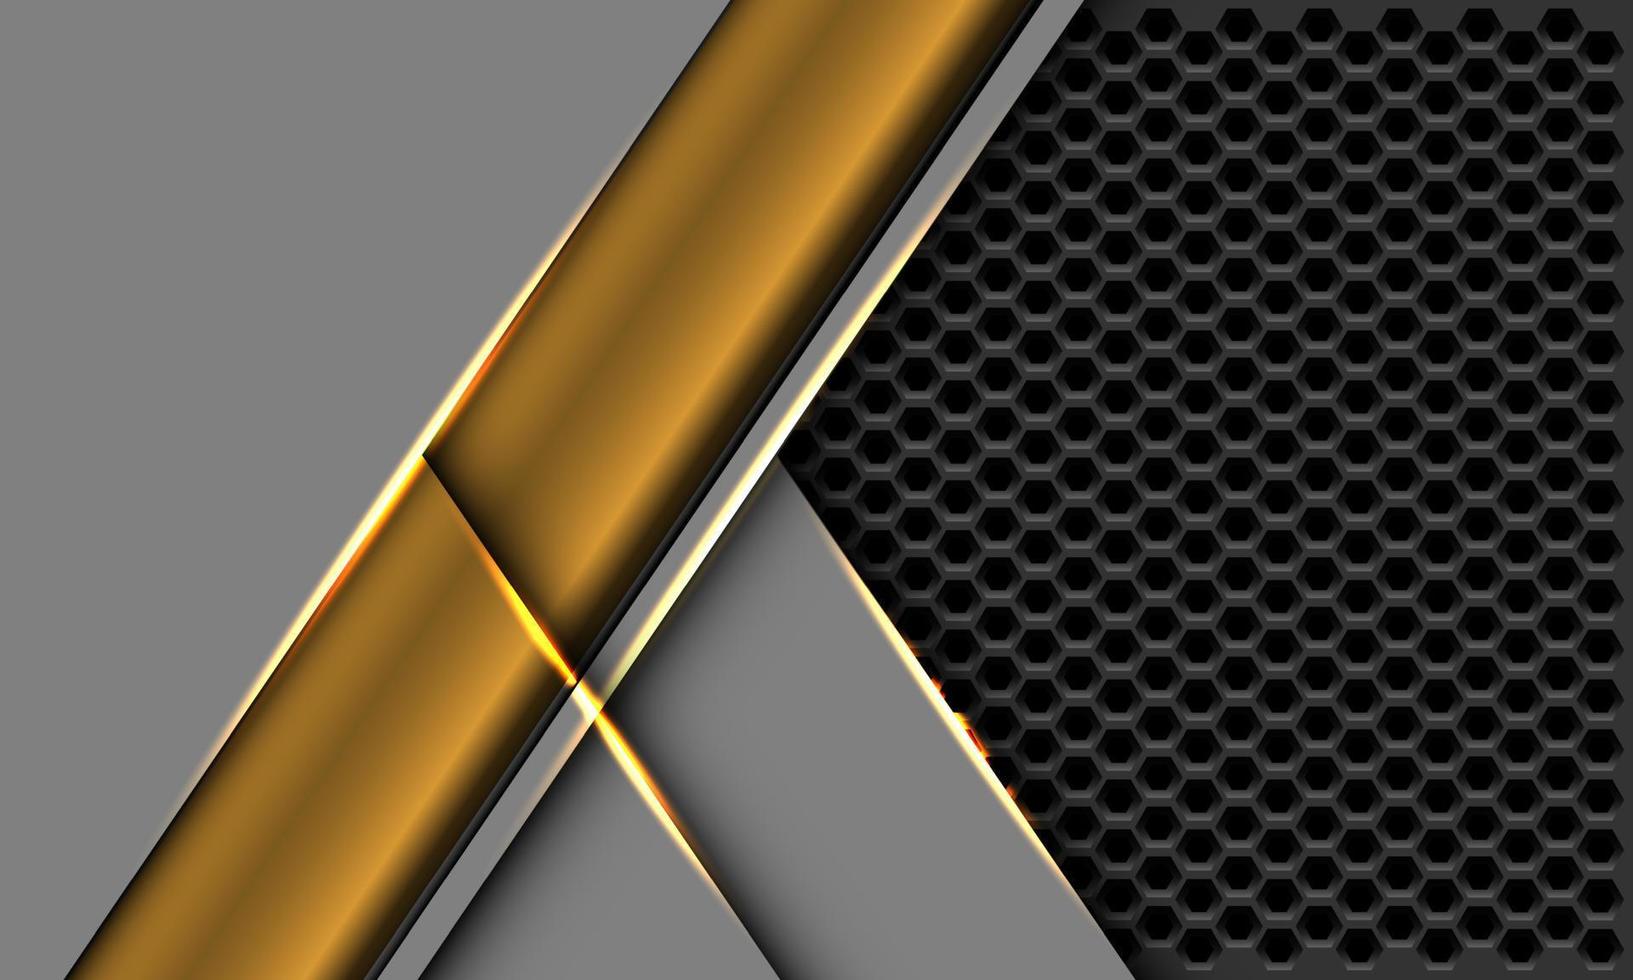 abstrakt guld baner snedstreck geometrisk med grå metallisk sexhörning maska design modern trogen bakgrund vektor